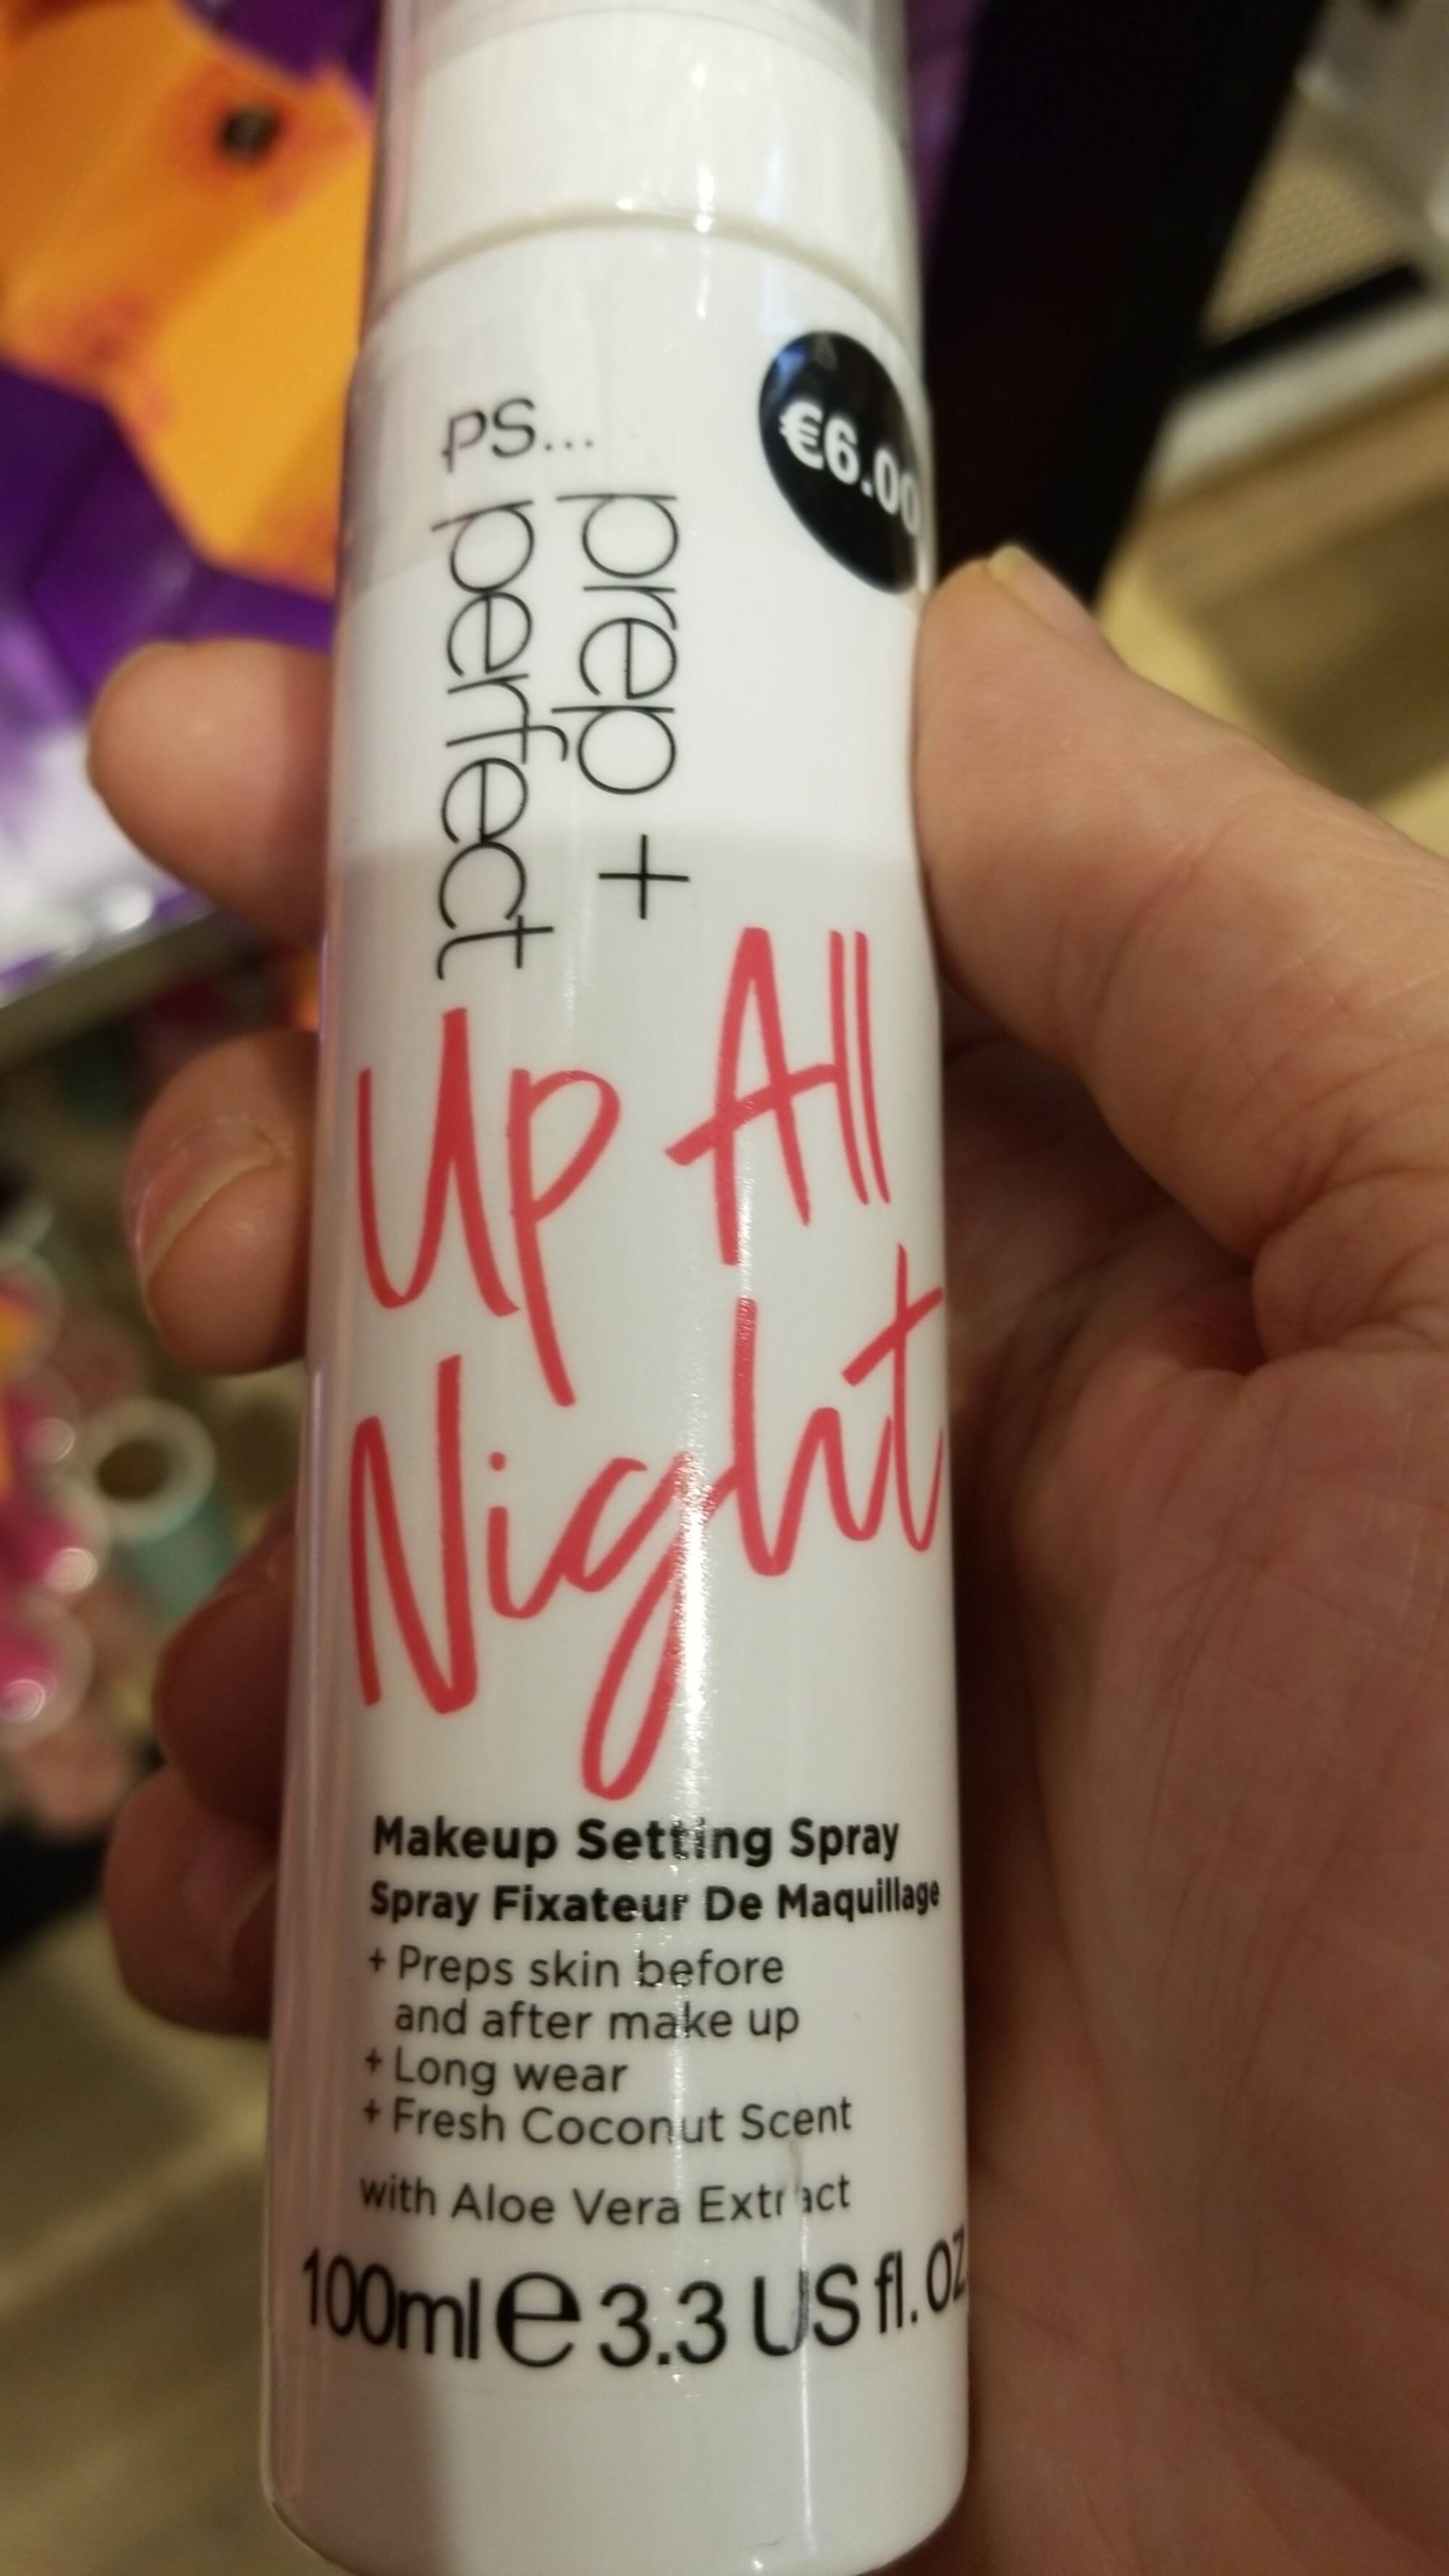 PRIMARK - Up all night - spray fixateur de maquillage